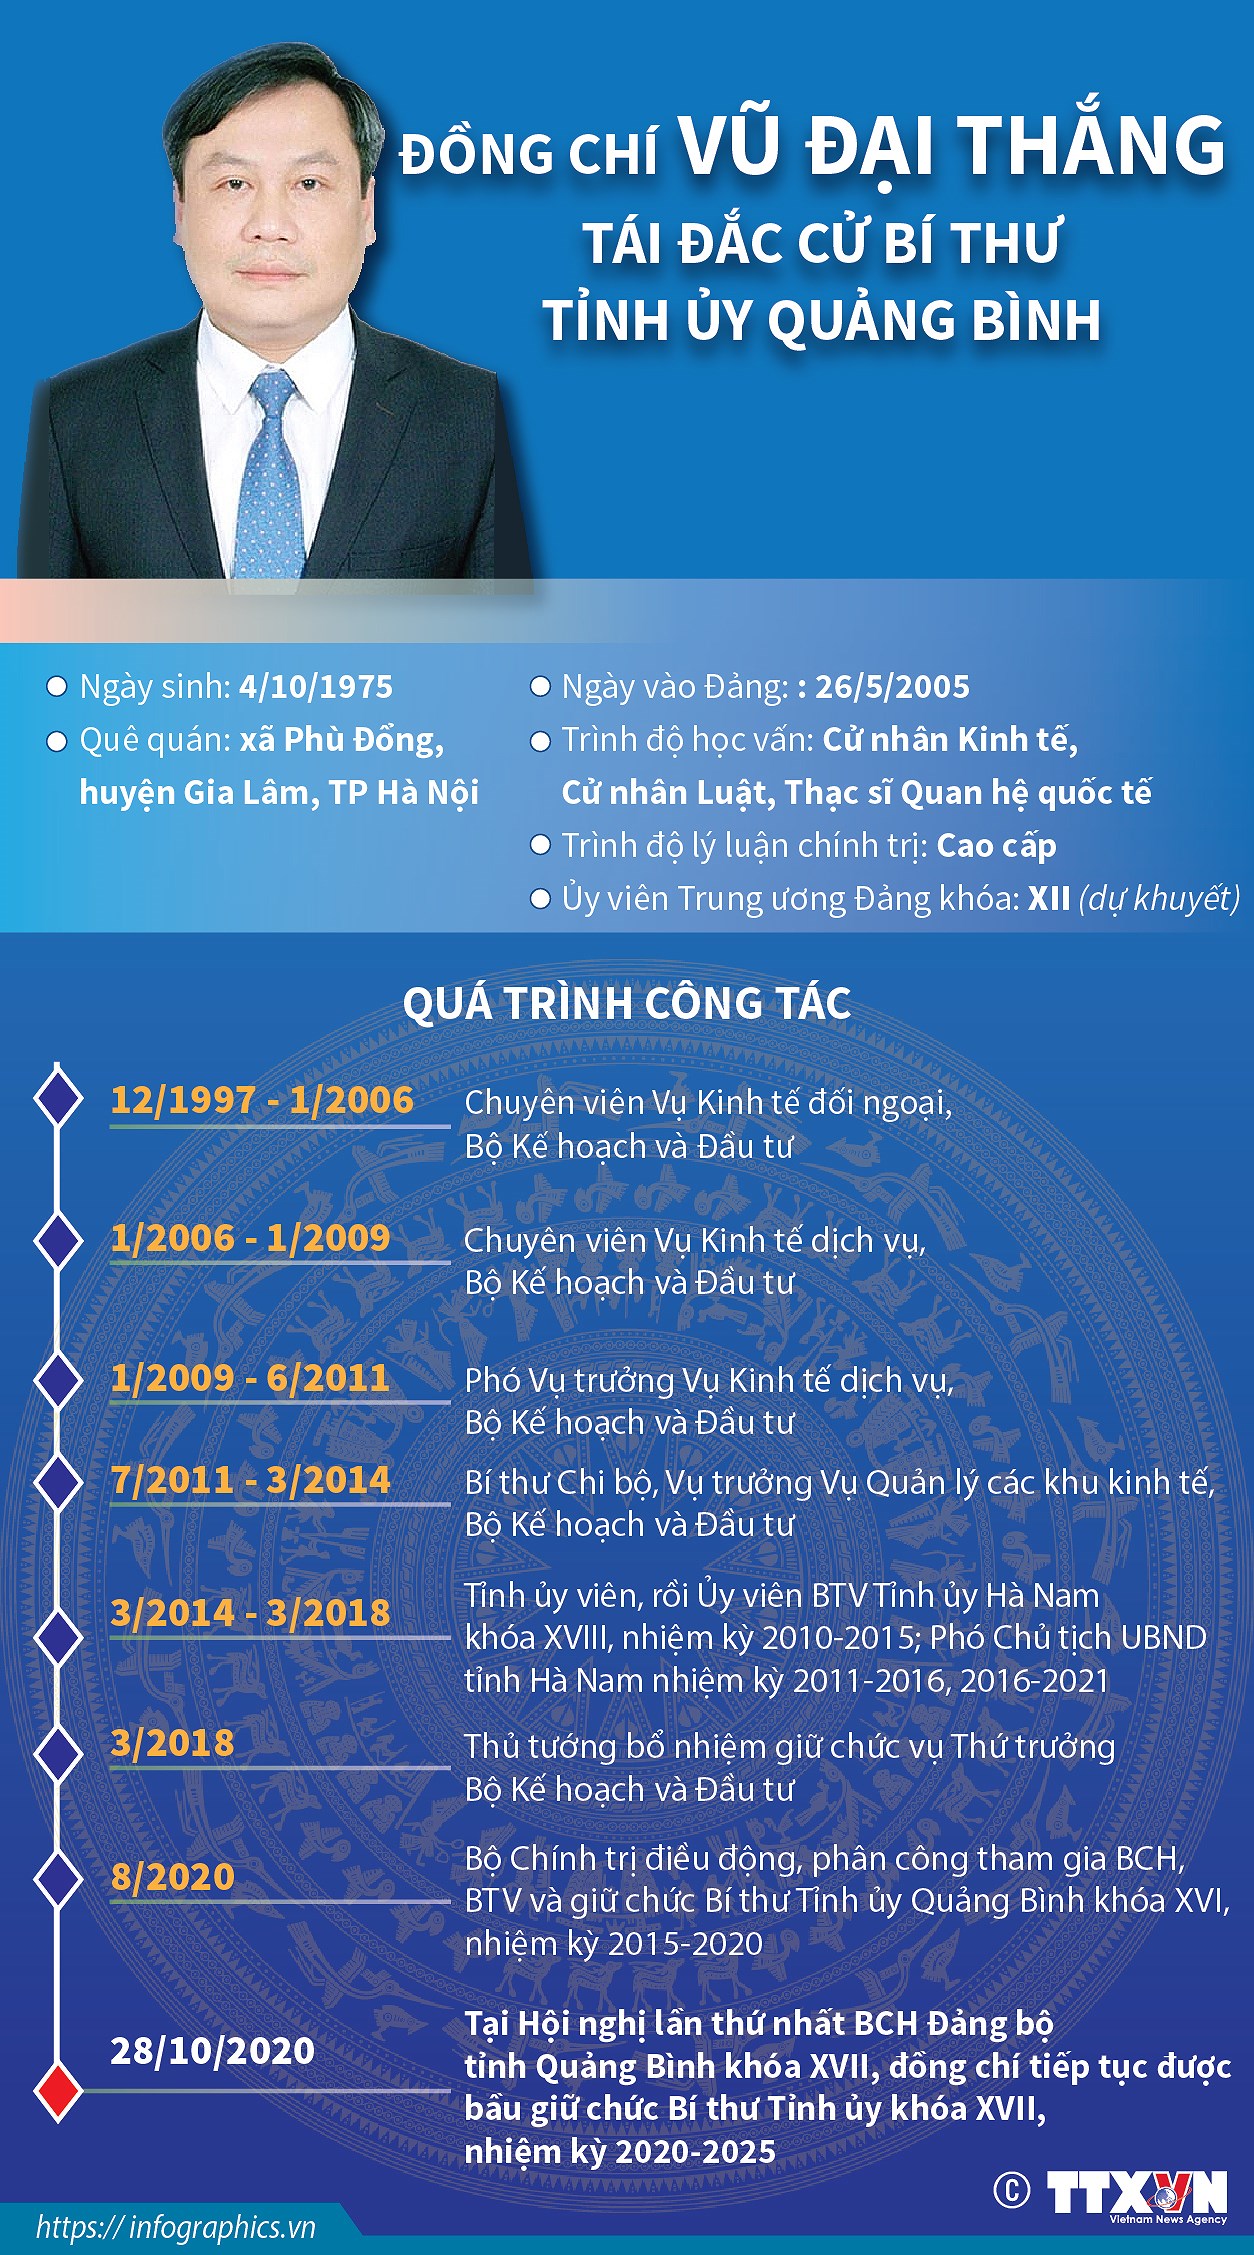 [Infographics] Ong Vu Dai Thang tai dac cu Bi thu Tinh uy Quang Binh hinh anh 1